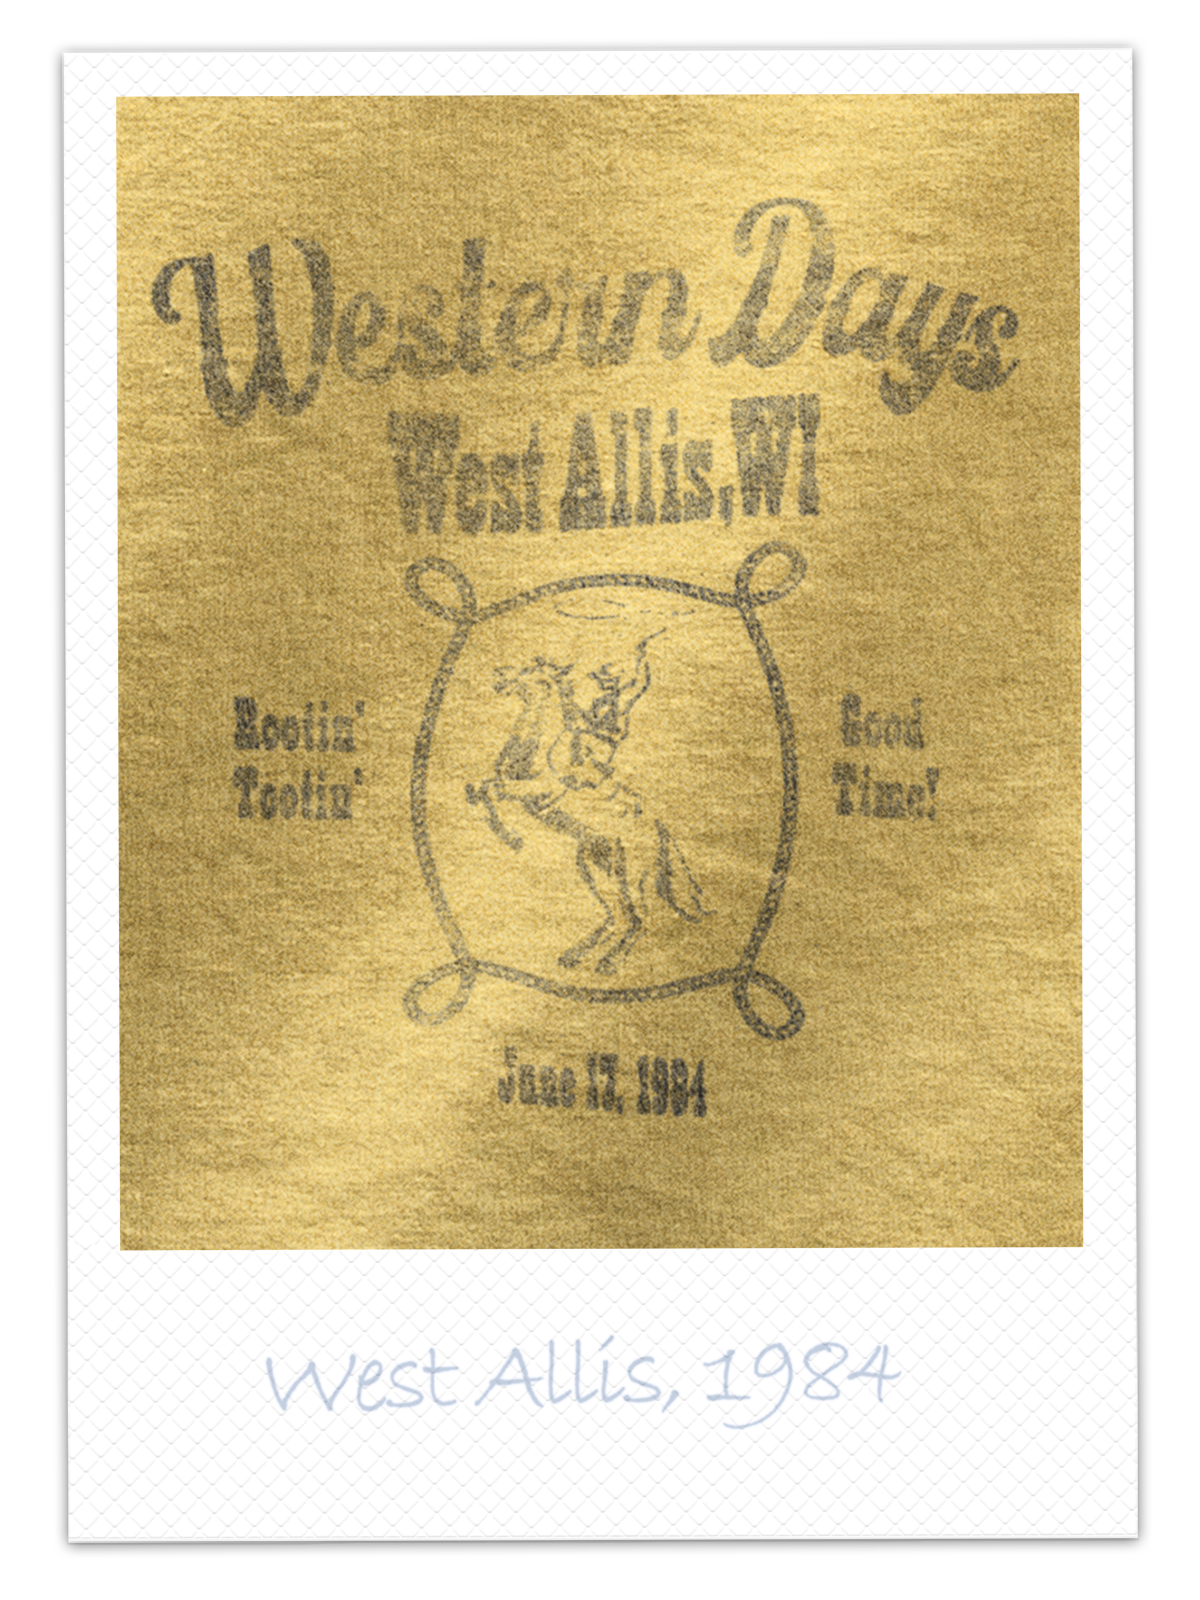 West Allis Western Days 1984 Adult Tee